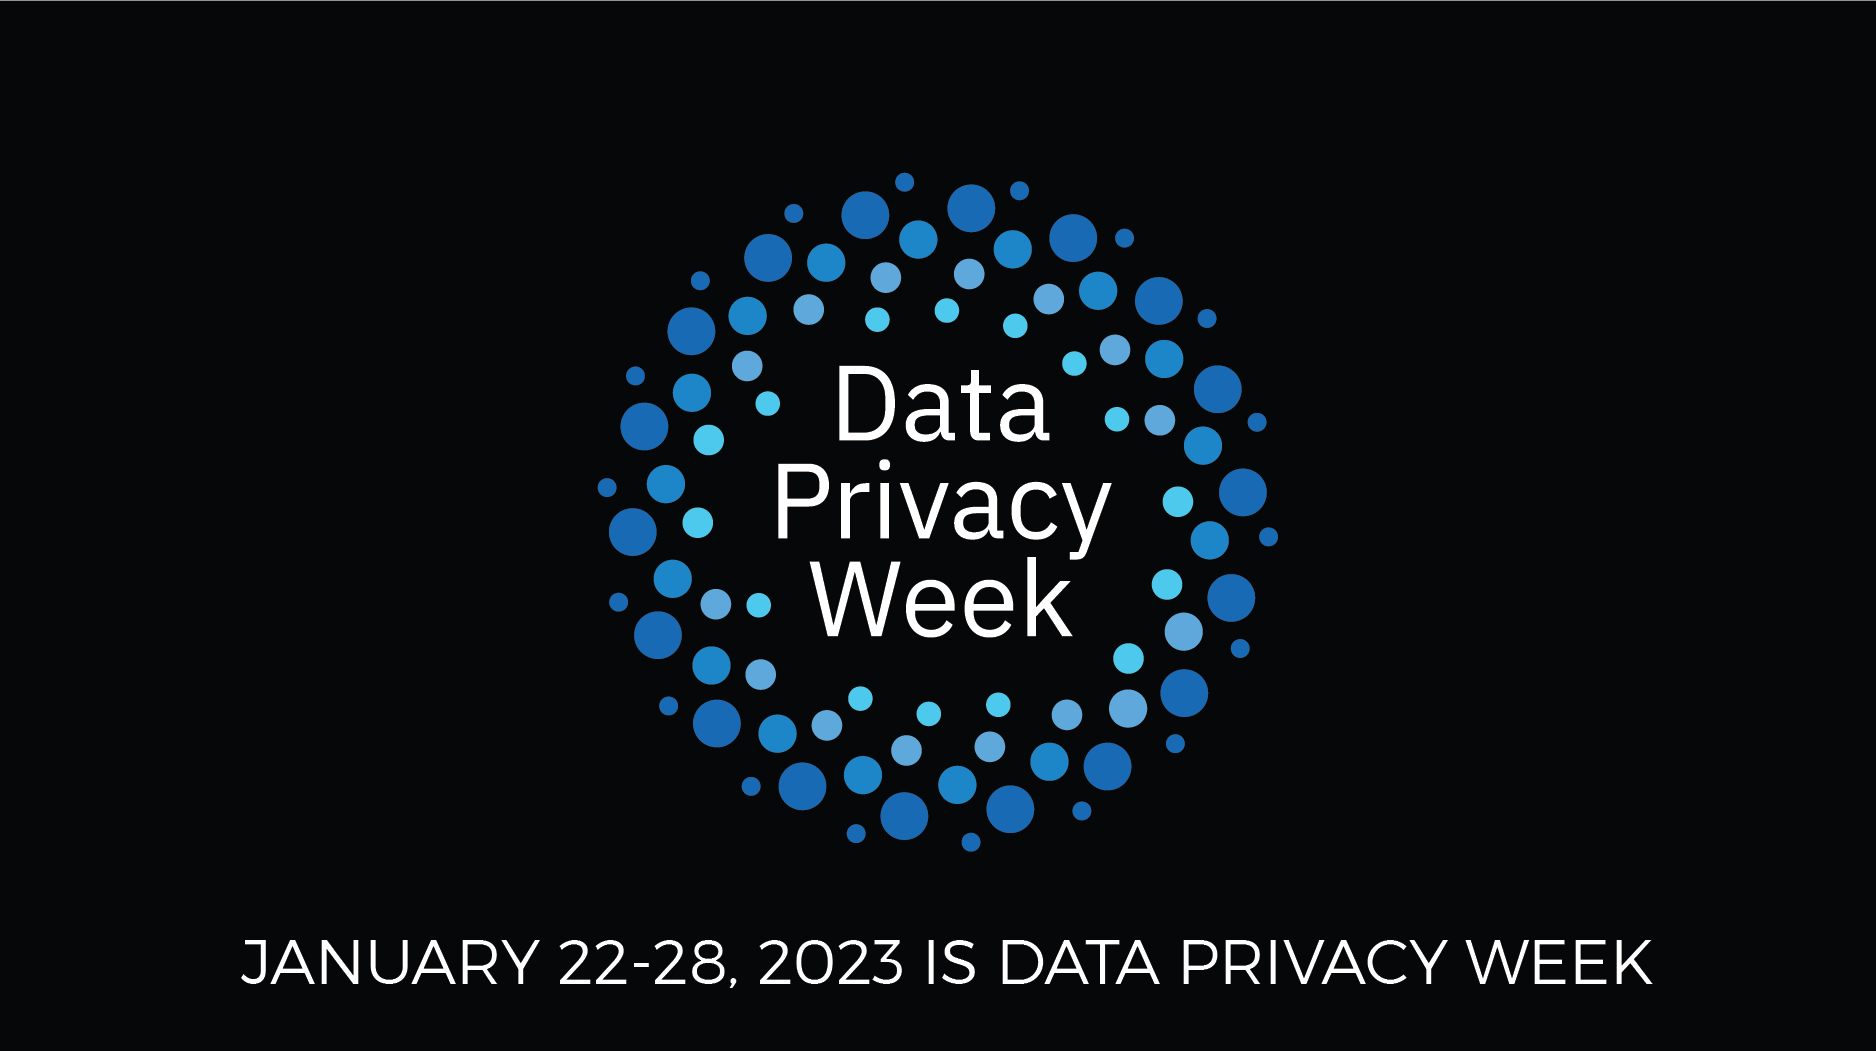 Data Privacy Week Jan. 22-28, 2023